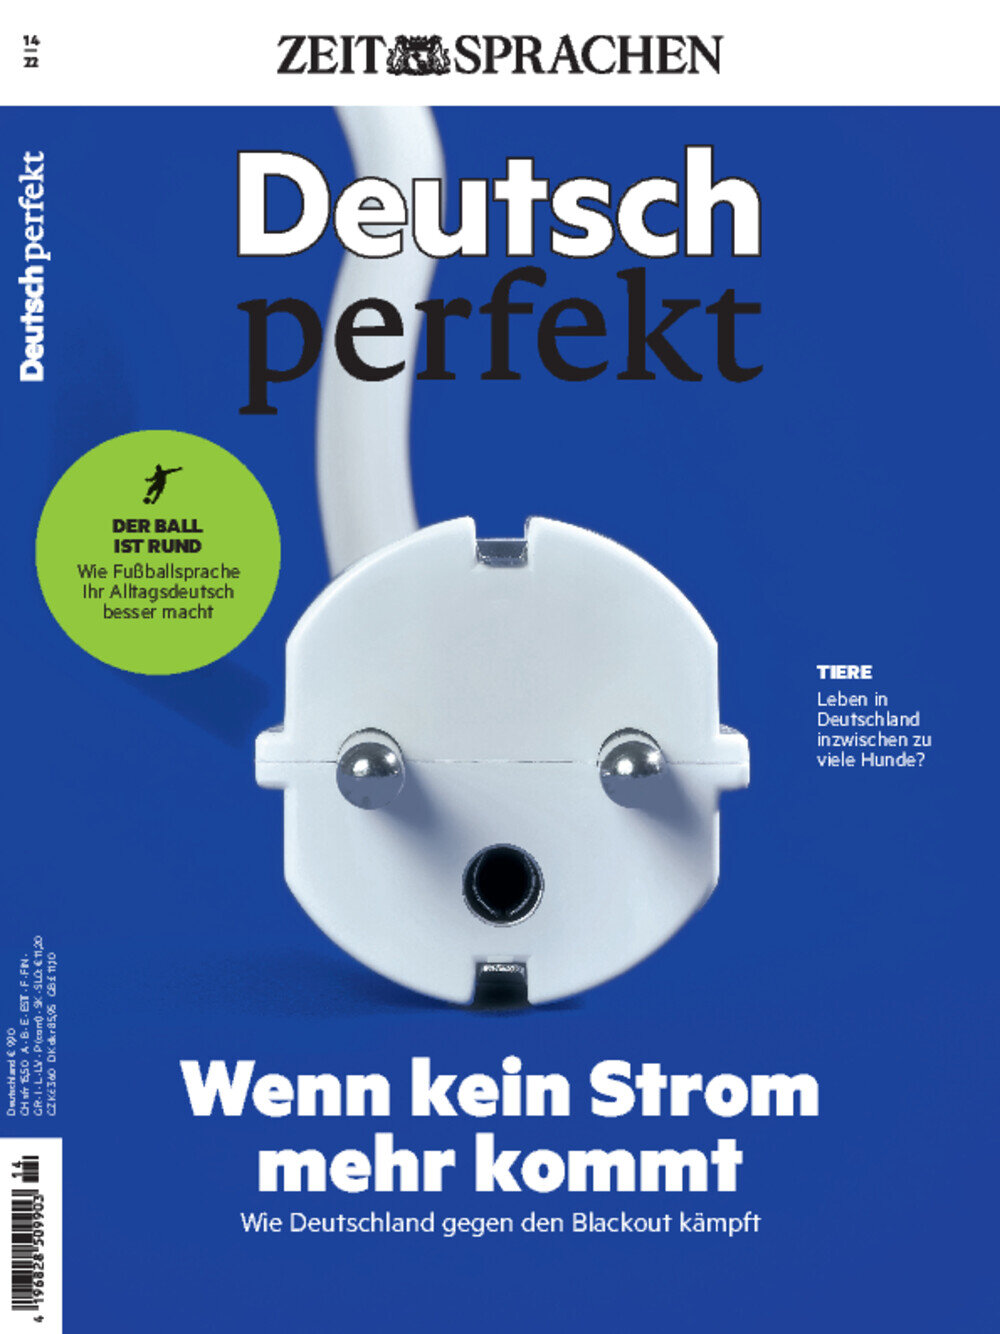 Deutsch perfekt ePaper 14/2022